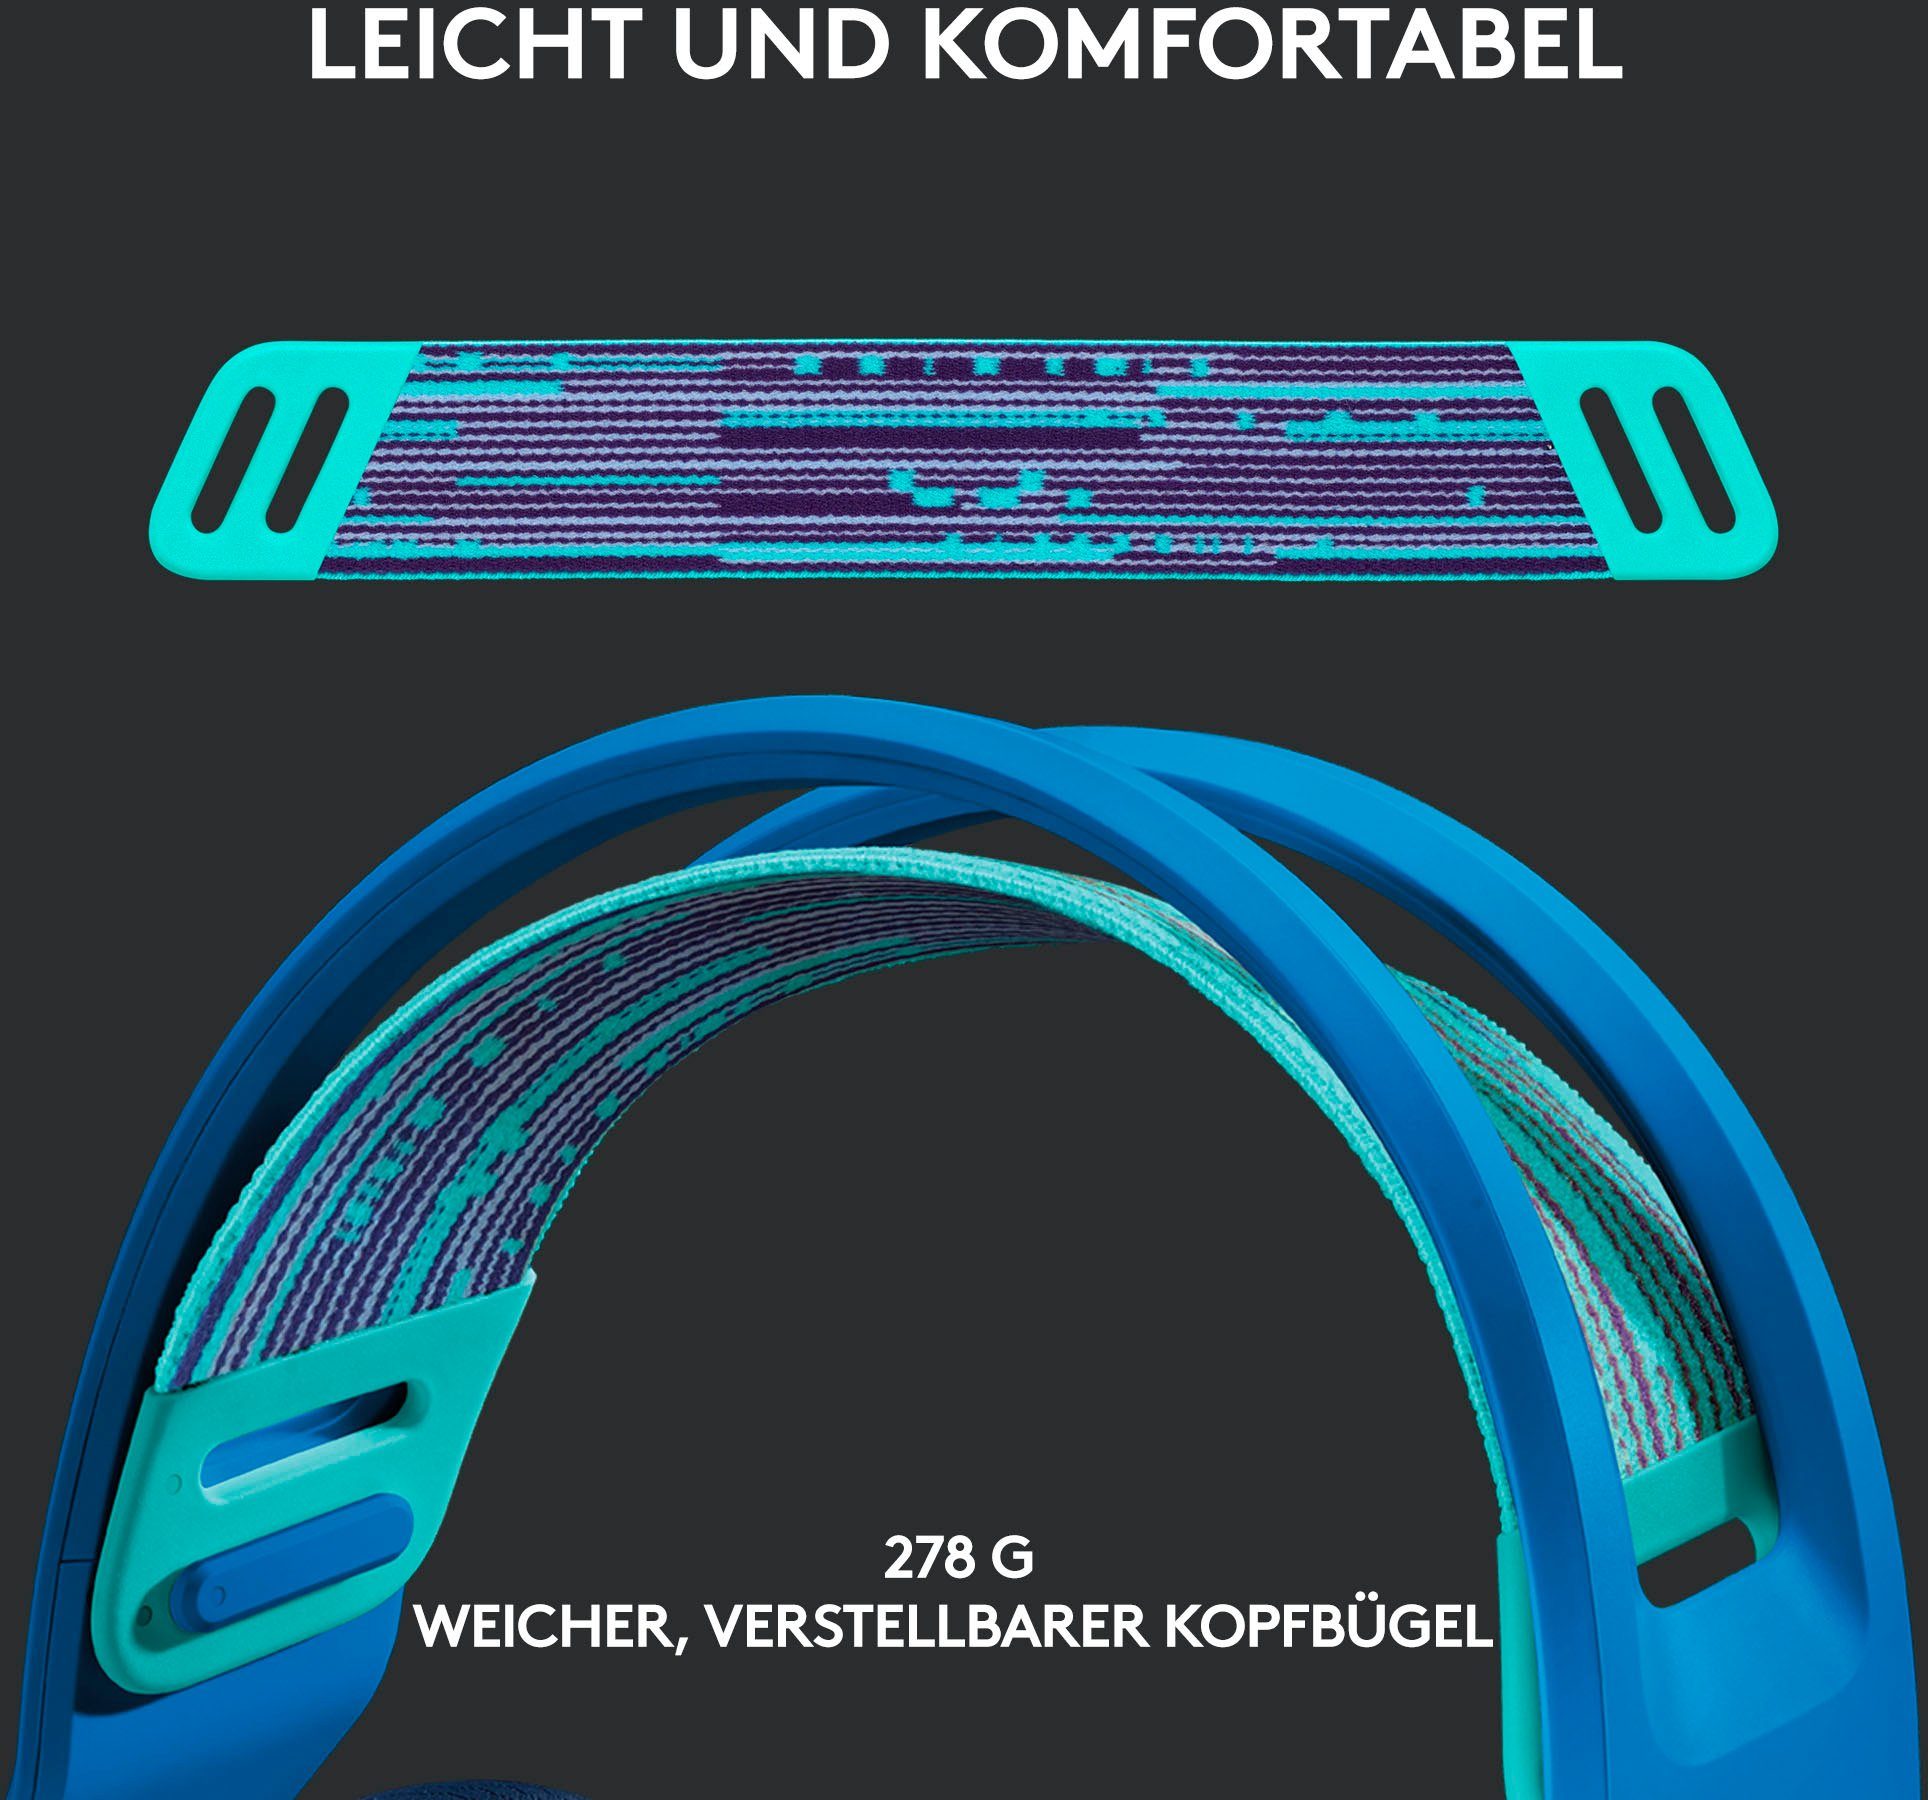 RGB Gaming-Headset (Mikrofon Wireless abnehmbar, blau G733 Logitech (WiFi) G WLAN LIGHTSPEED